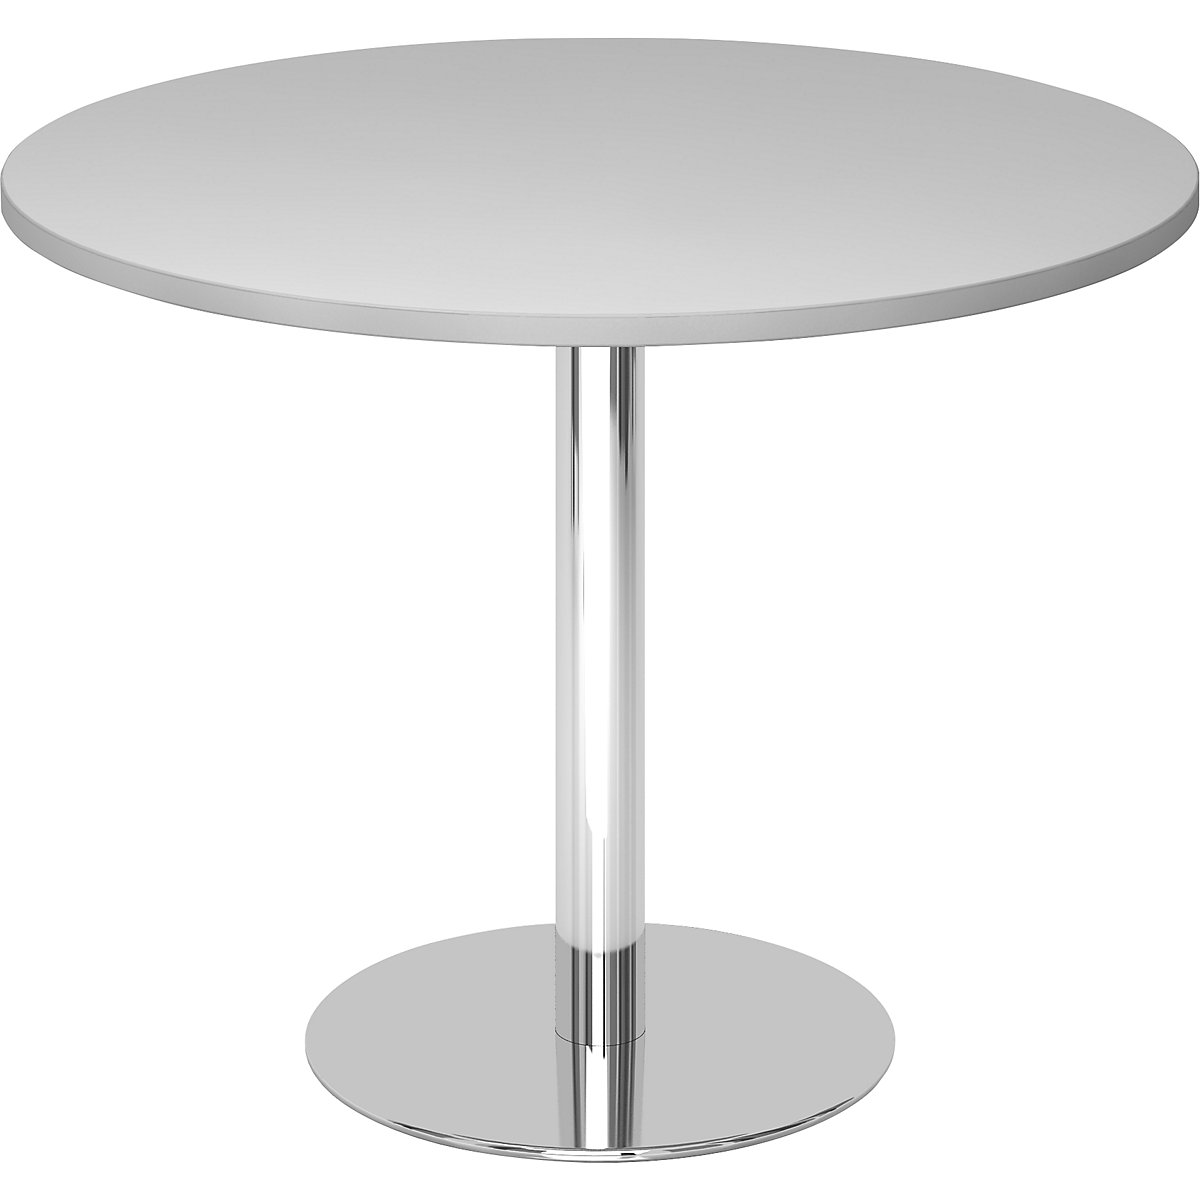 Konferenčna miza, Ø 1000 mm, višina 755 mm, kromirano ogrodje, svetlo siva plošča-6